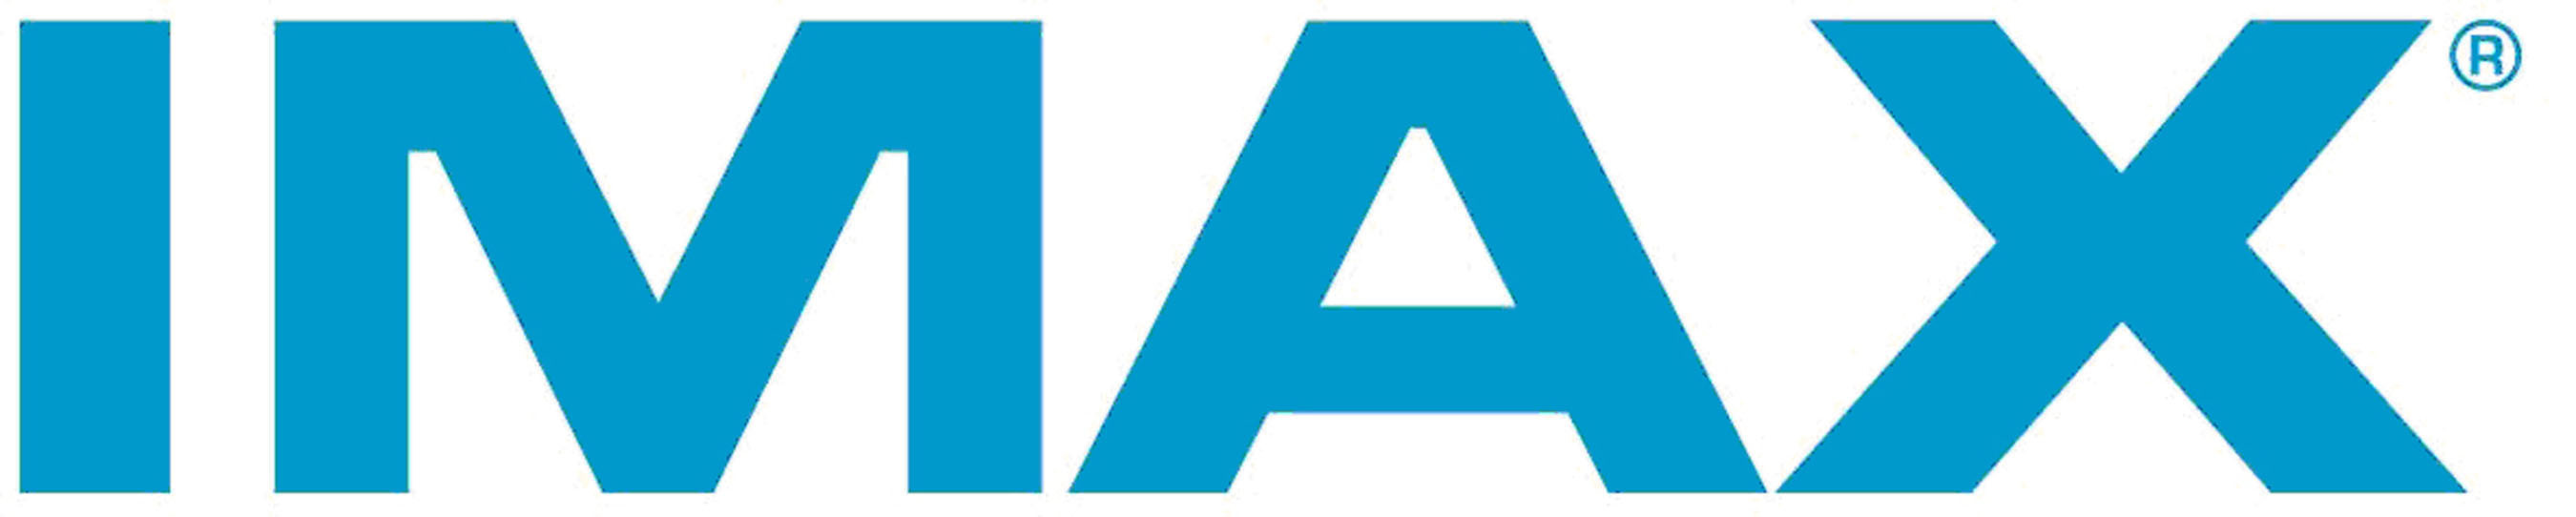 IMAX Logo. (PRNewsFoto/IMAX Corporation) (PRNewsFoto/)